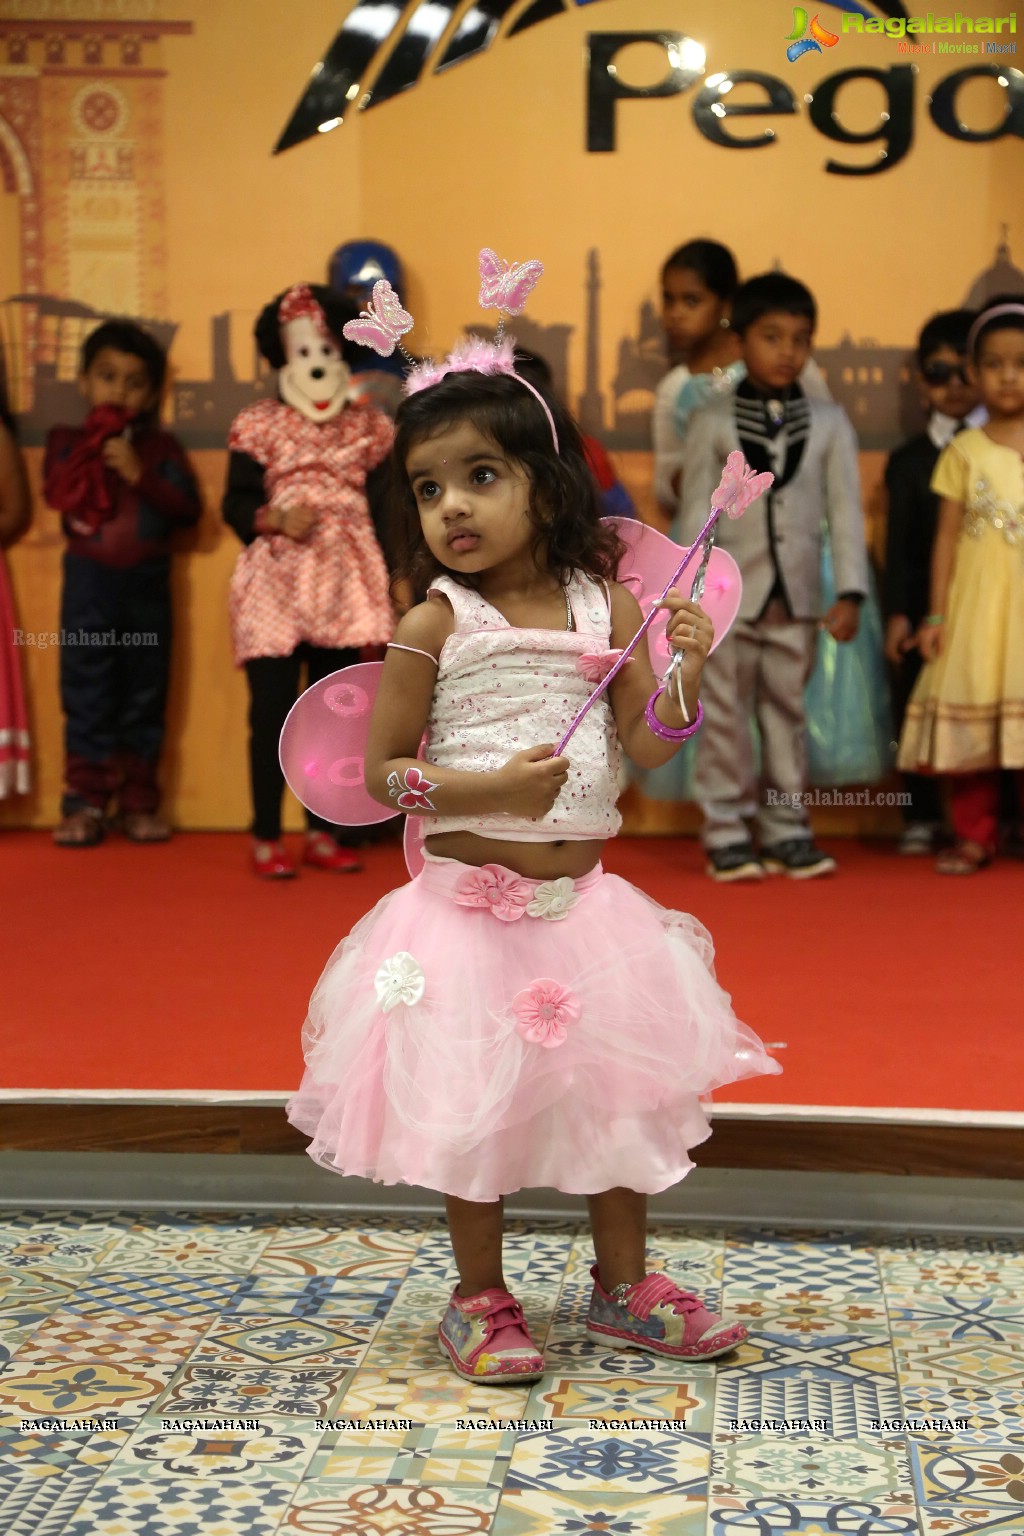 Kids Day 2016 Celebrations by Pegasystems, Hyderabad